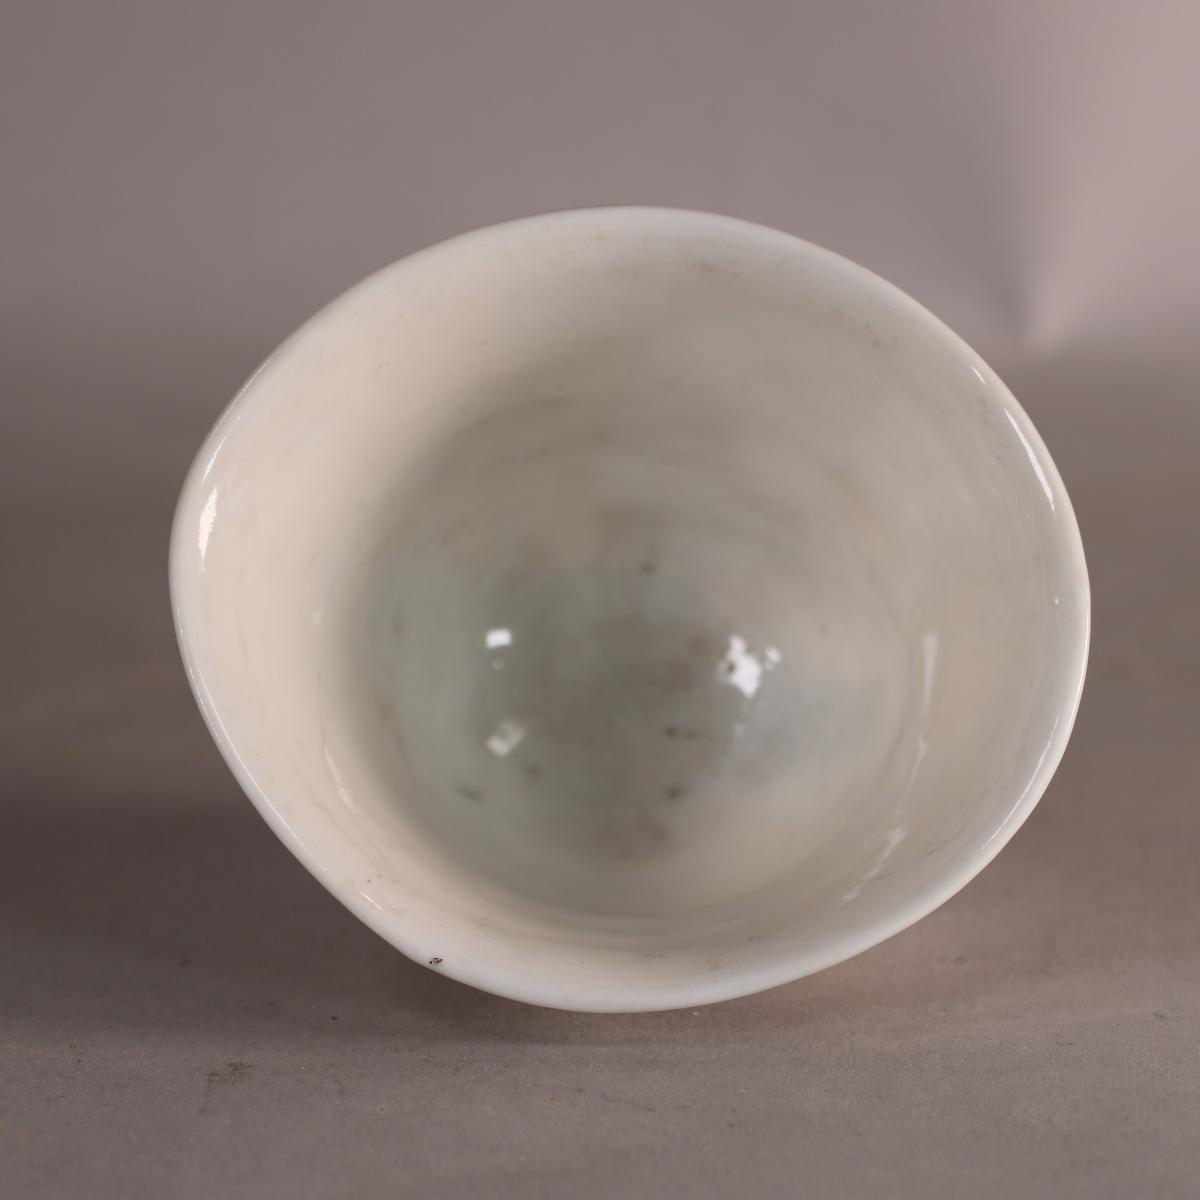 Interior of blanc de chine cup